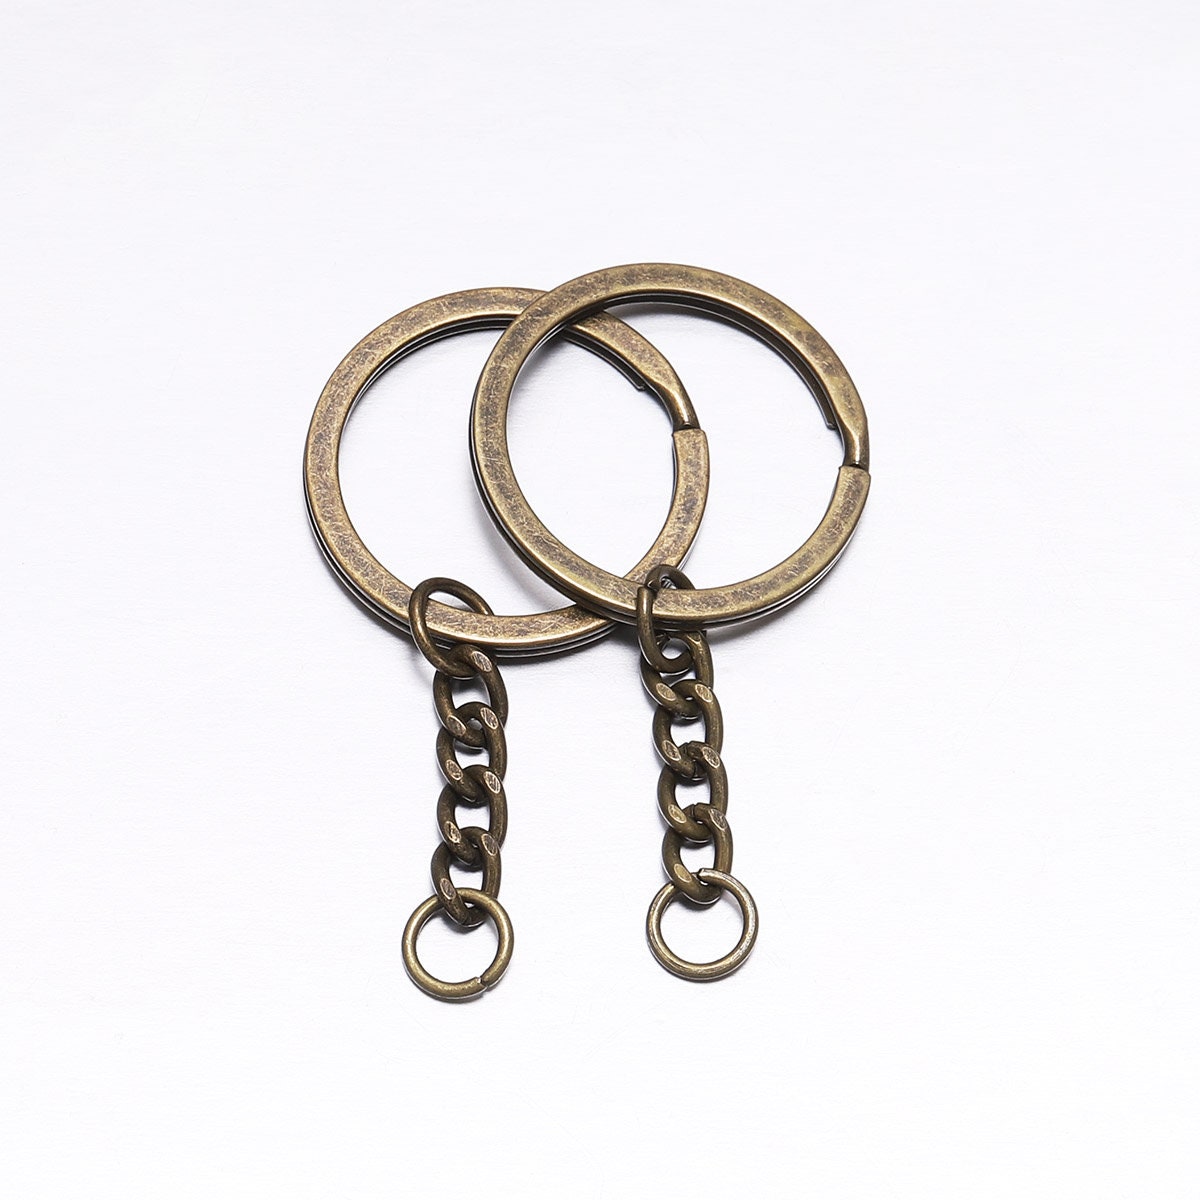 10 Pcs X Bulk Keychain Supplies, Key Chain Keyring With Chain, Key Chain  Making, Split Key Ring Holder Bronze, Gold, Copper, Silver, Gold 